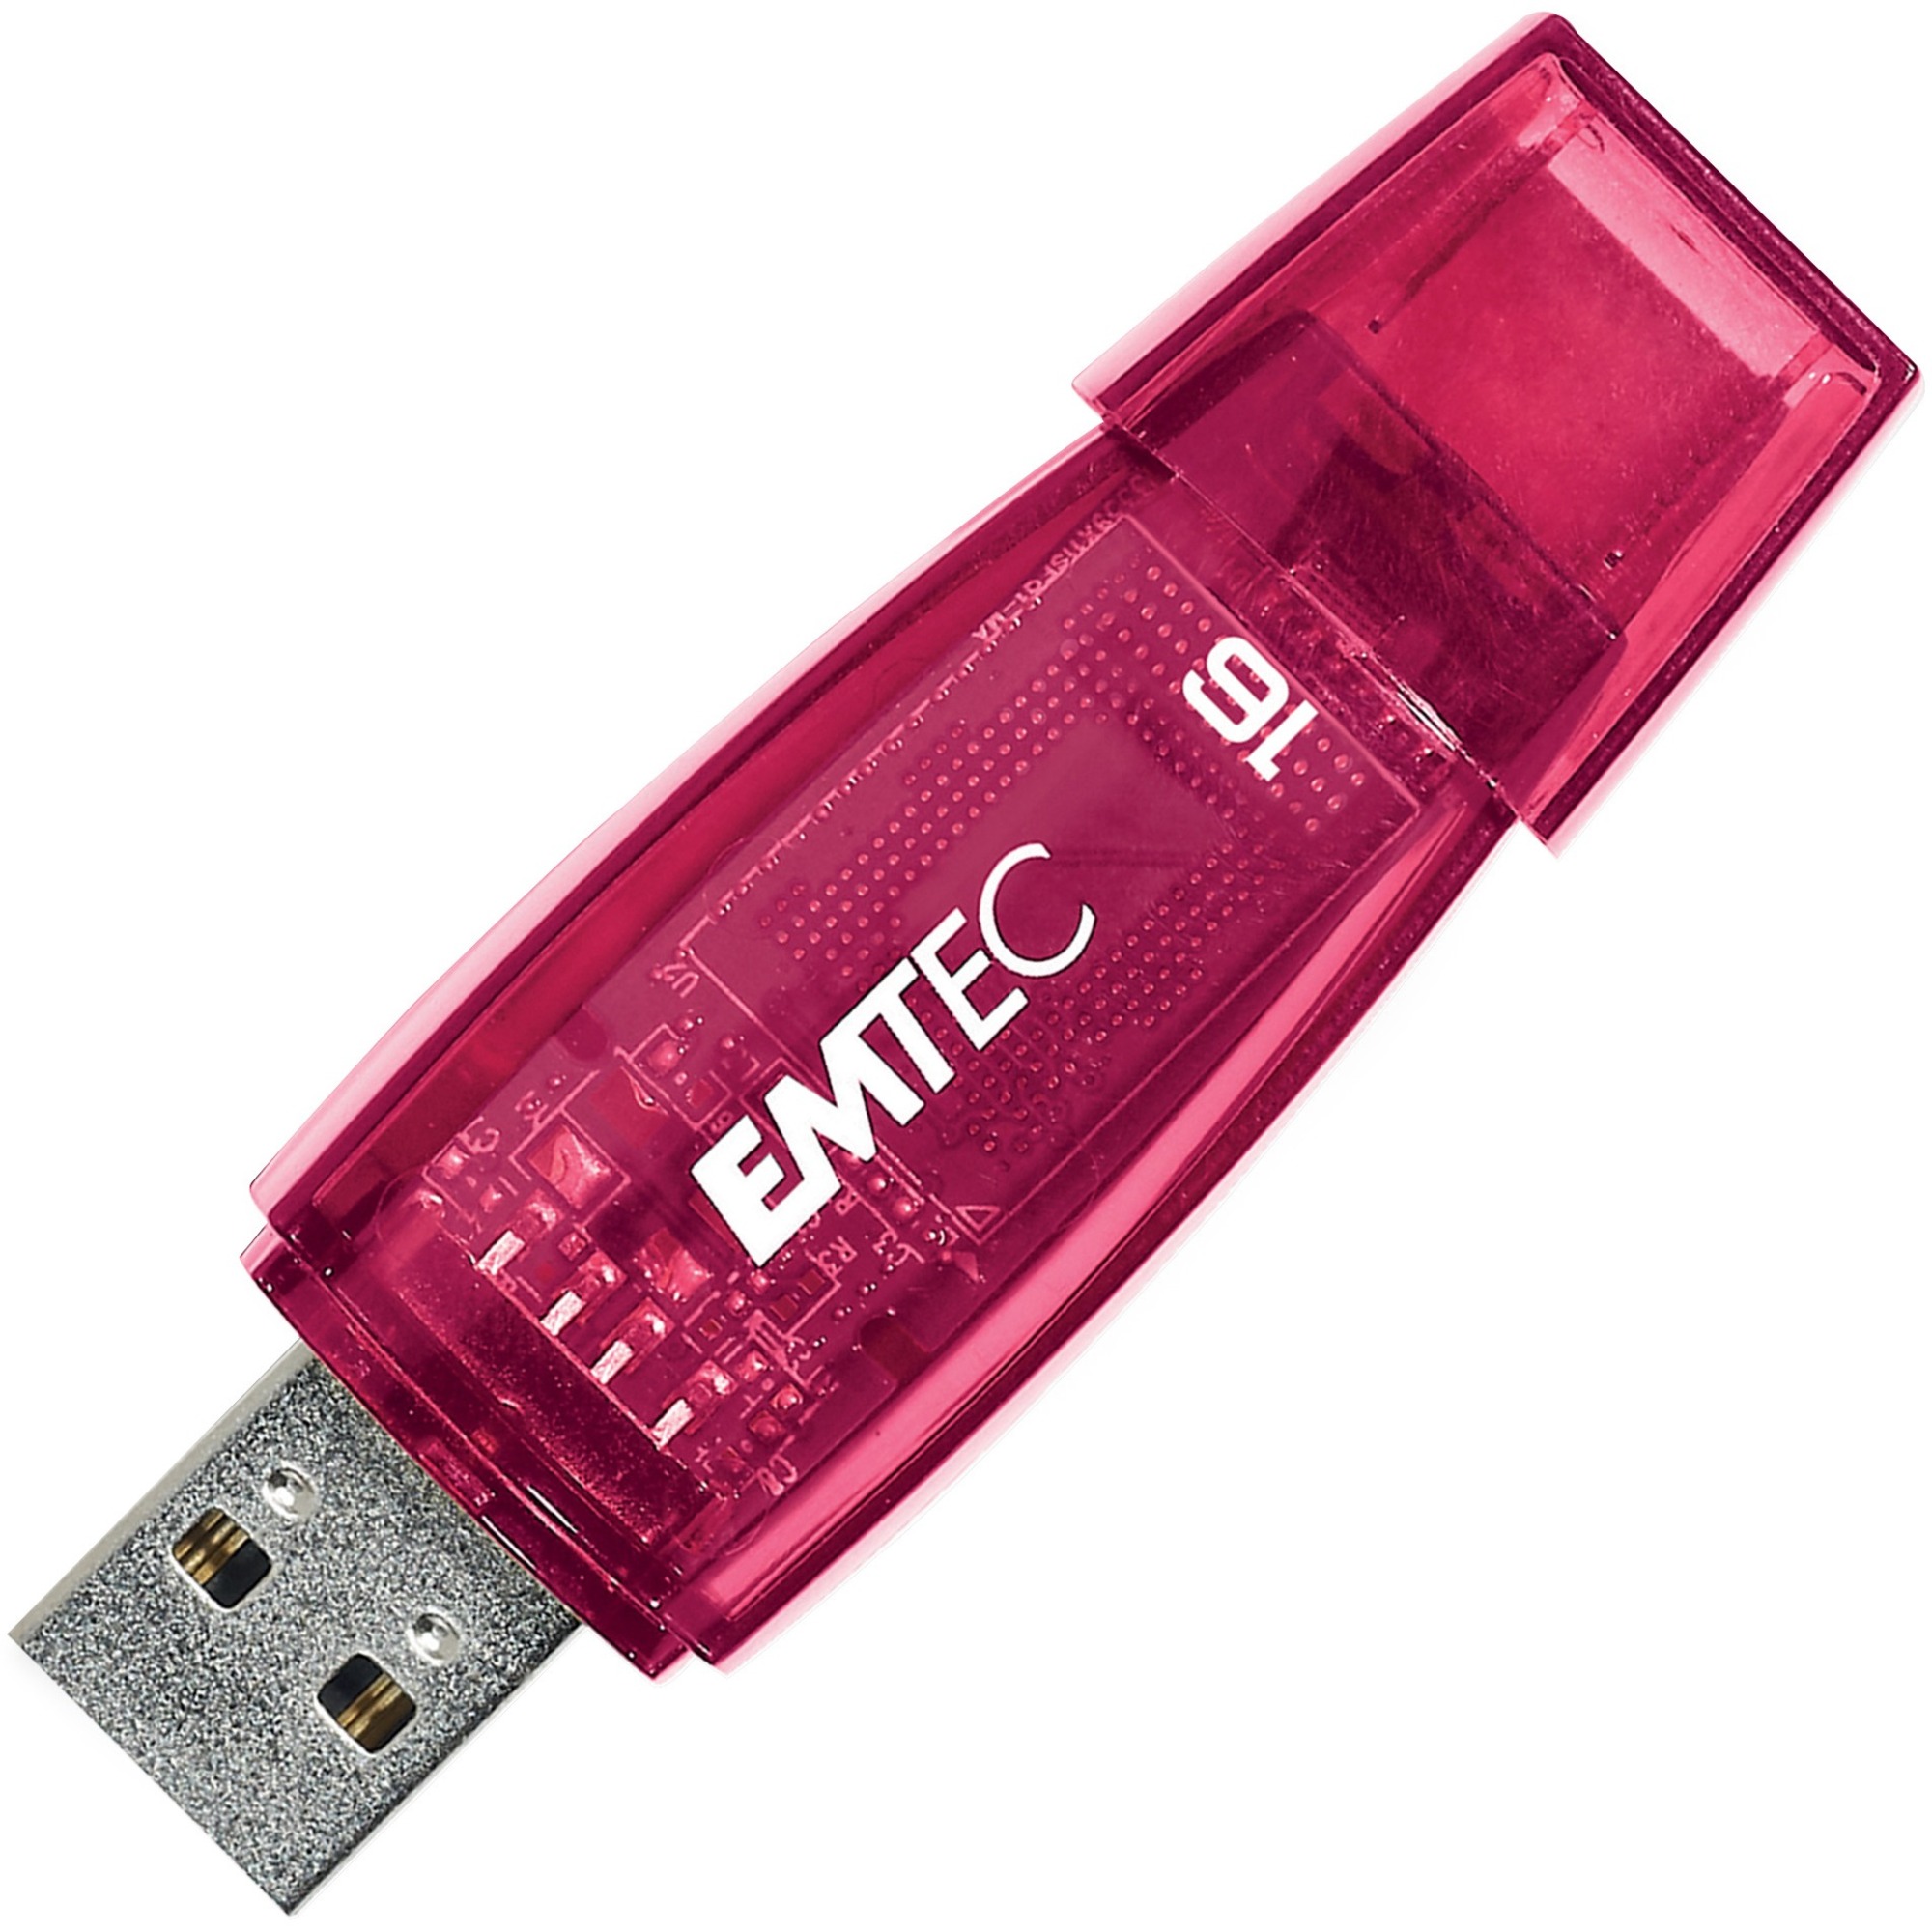 EMTEC 16GB C410 USB 2.0 Flash Drive  16 GBUSB 2.0  Madill  The